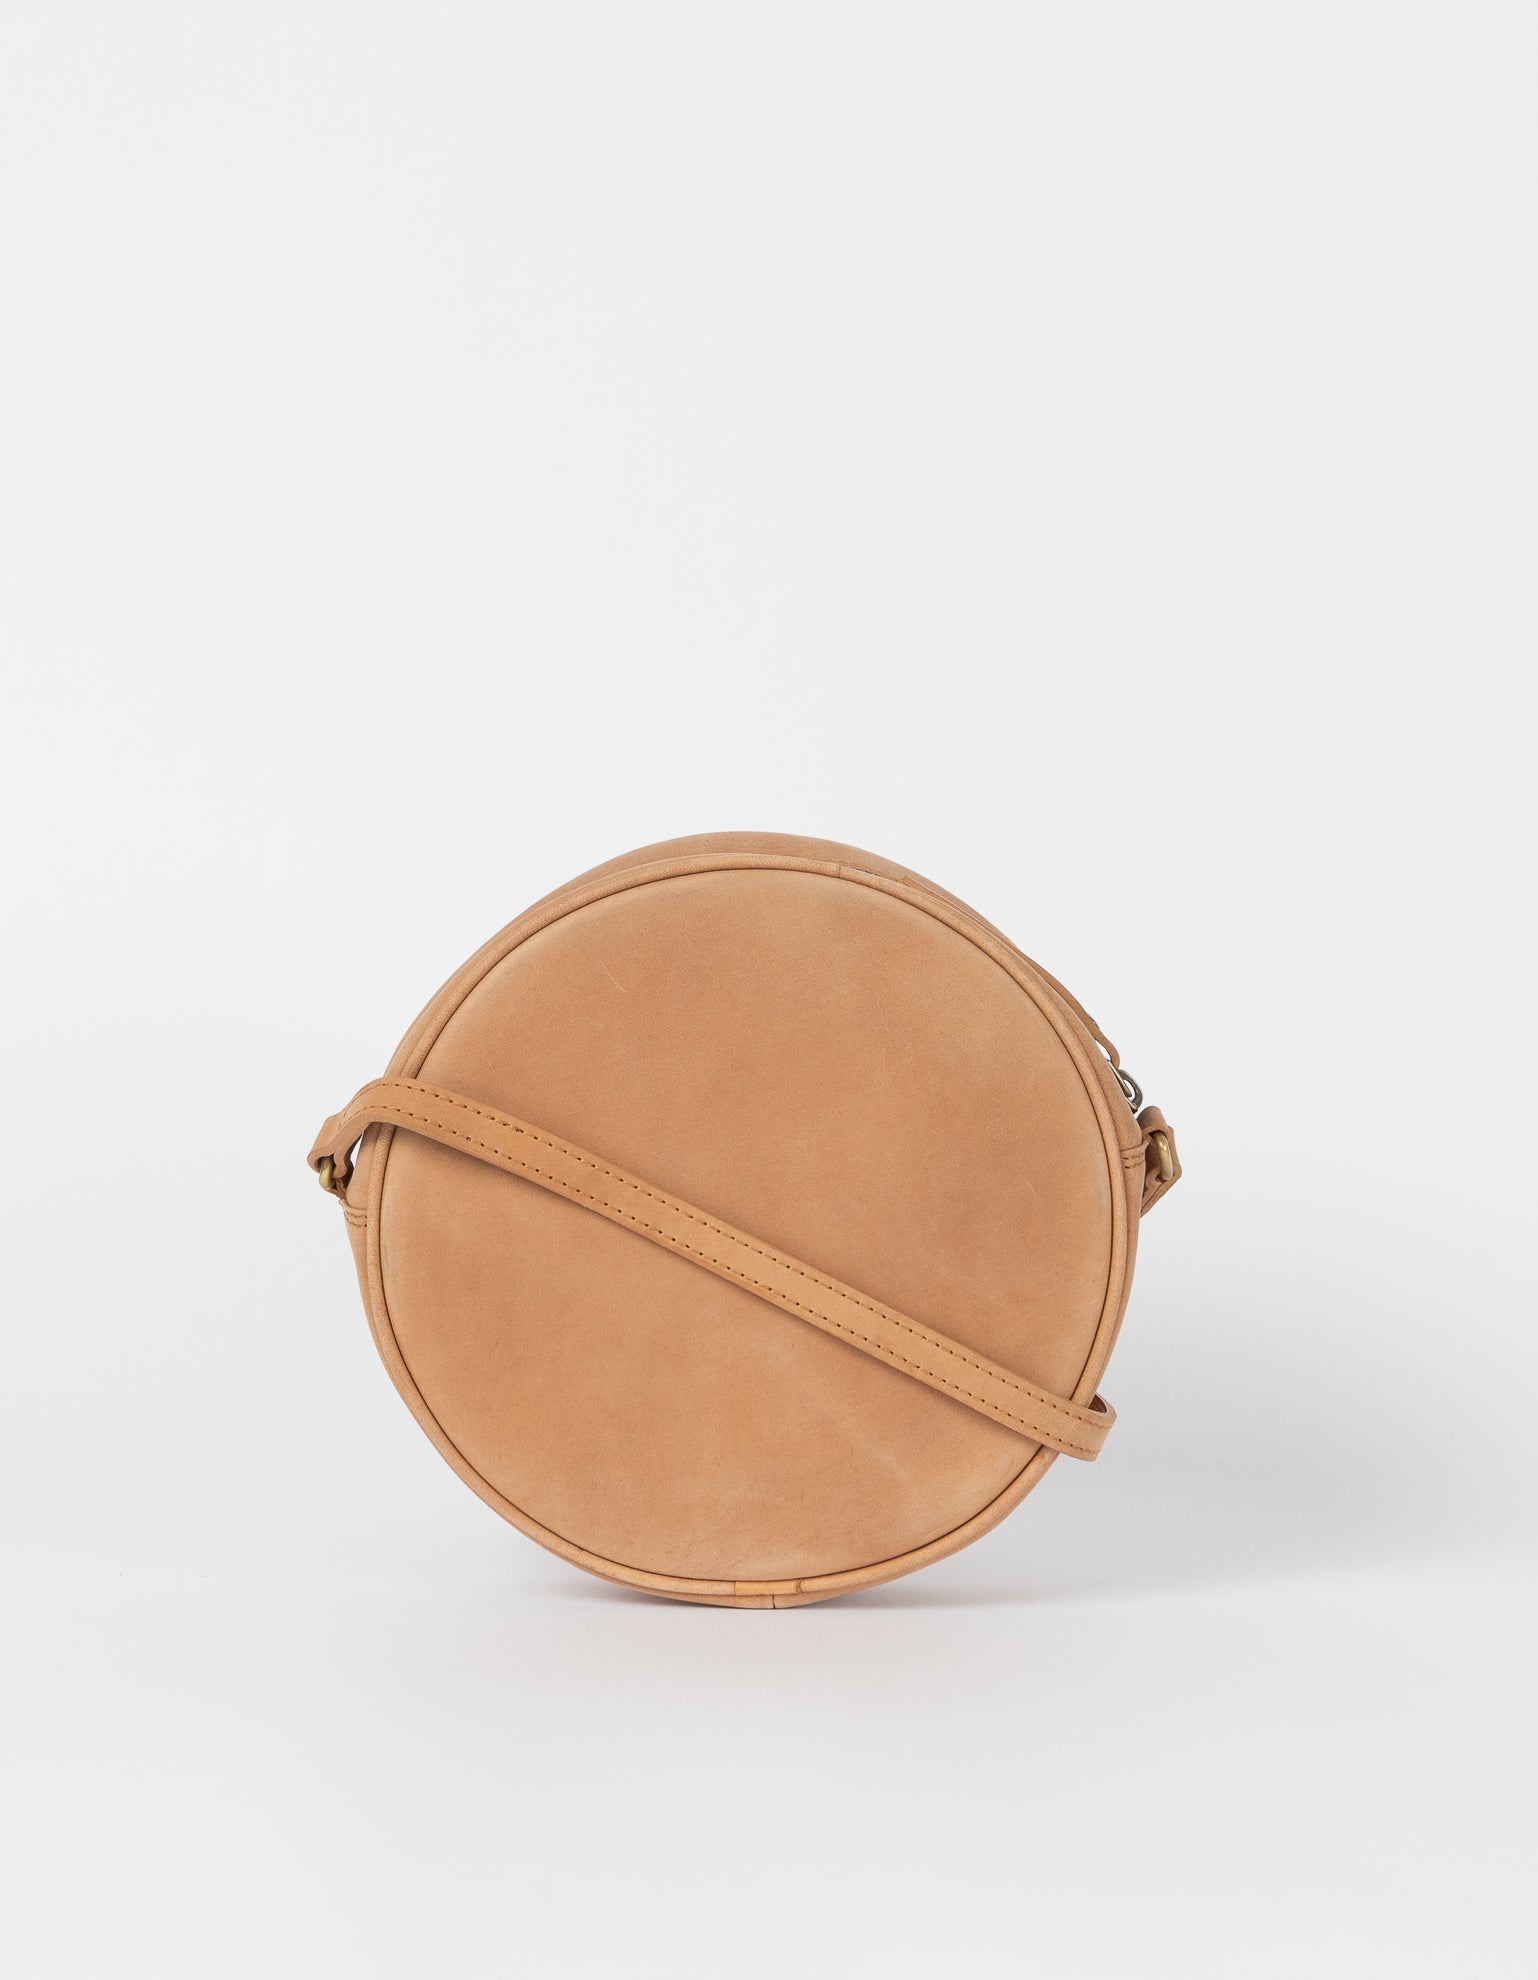 Luna Bag Camel Hunter Leather. Circular crossbody bag for women. Back product image.